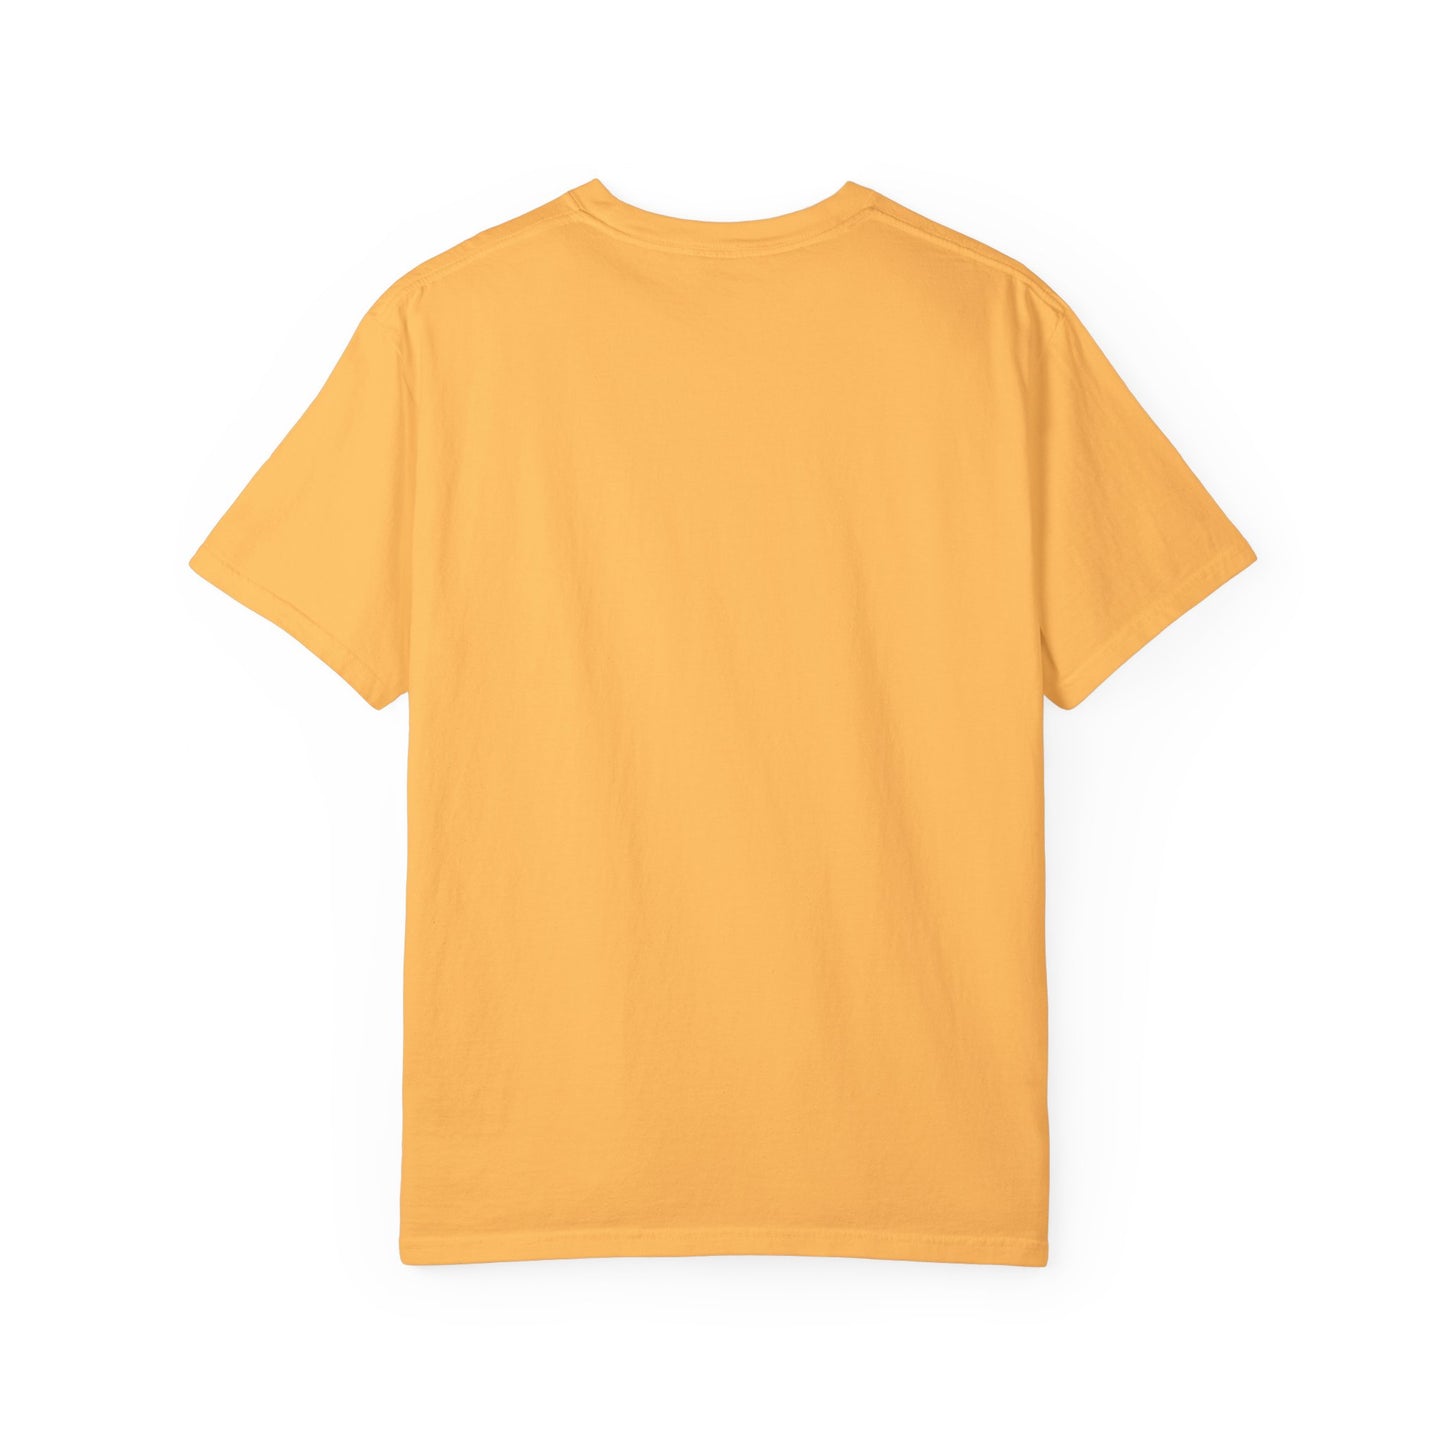 Mast-Zilla Chronic Illness Unisex Garment-Dyed T-shirt